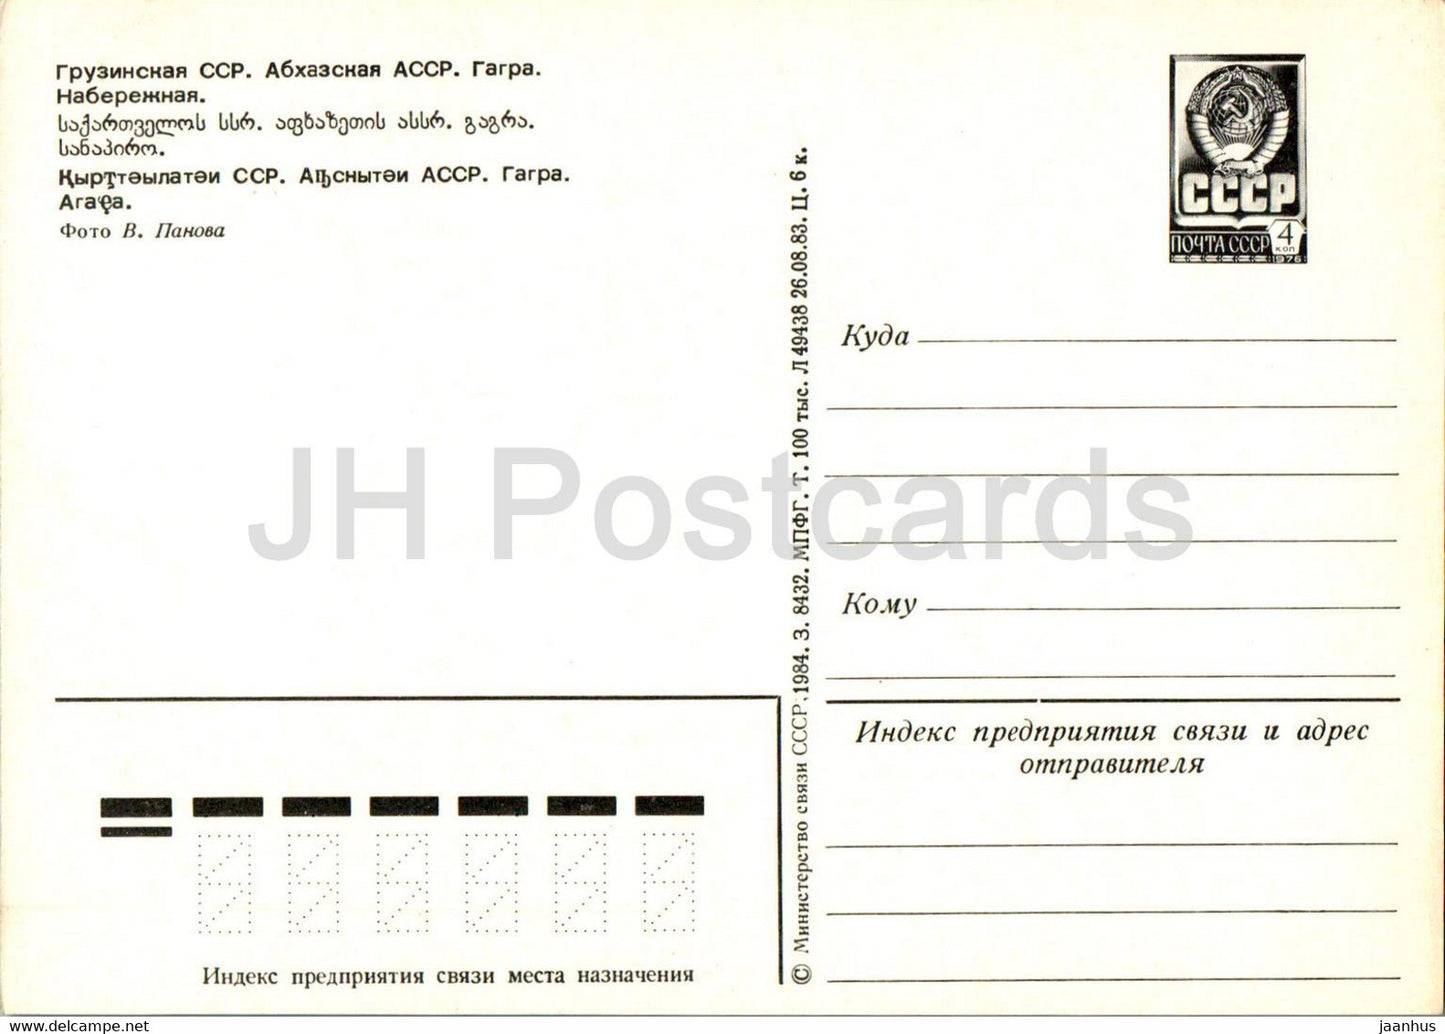 Gagra - remblai - Abkhazie - entier postal - 1984 - Géorgie URSS - inutilisé